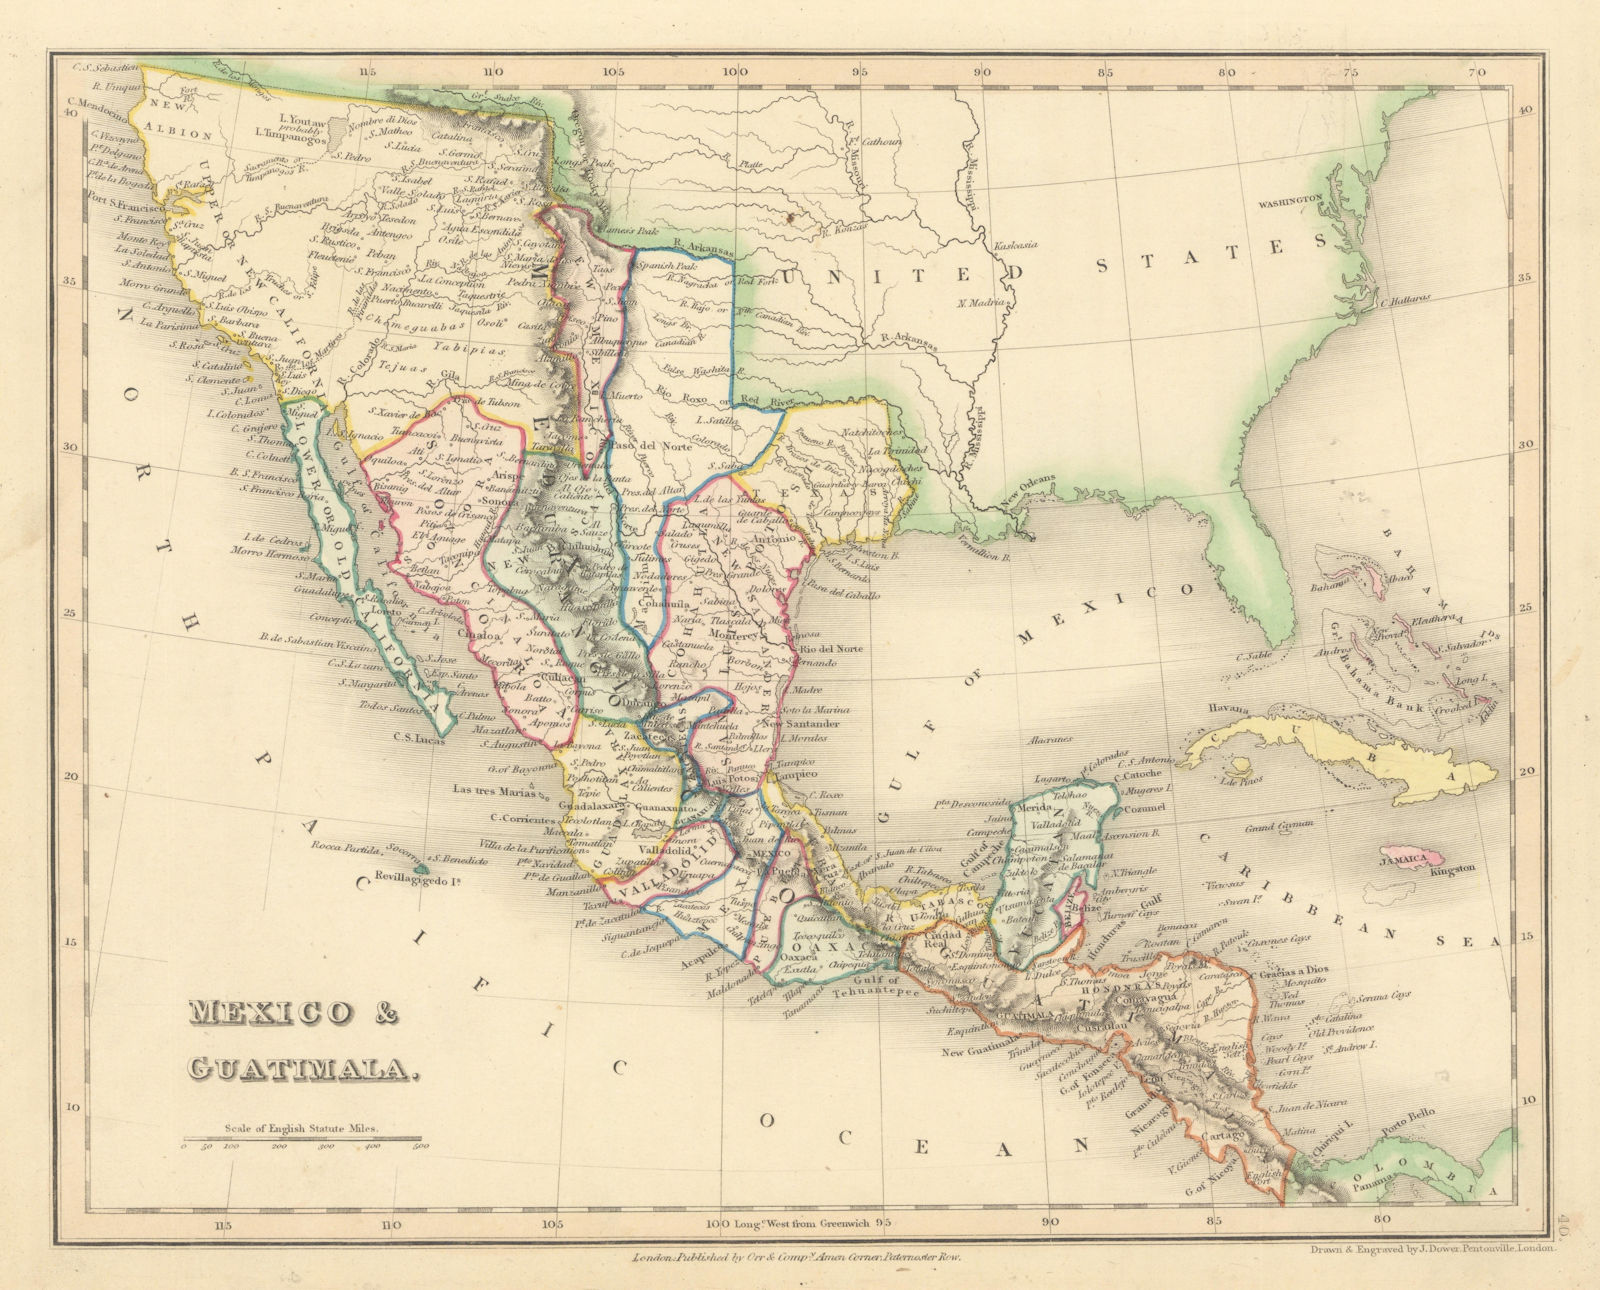 Mexico & Guatimala by John Dower. Mexico includes California & Texas 1845 map